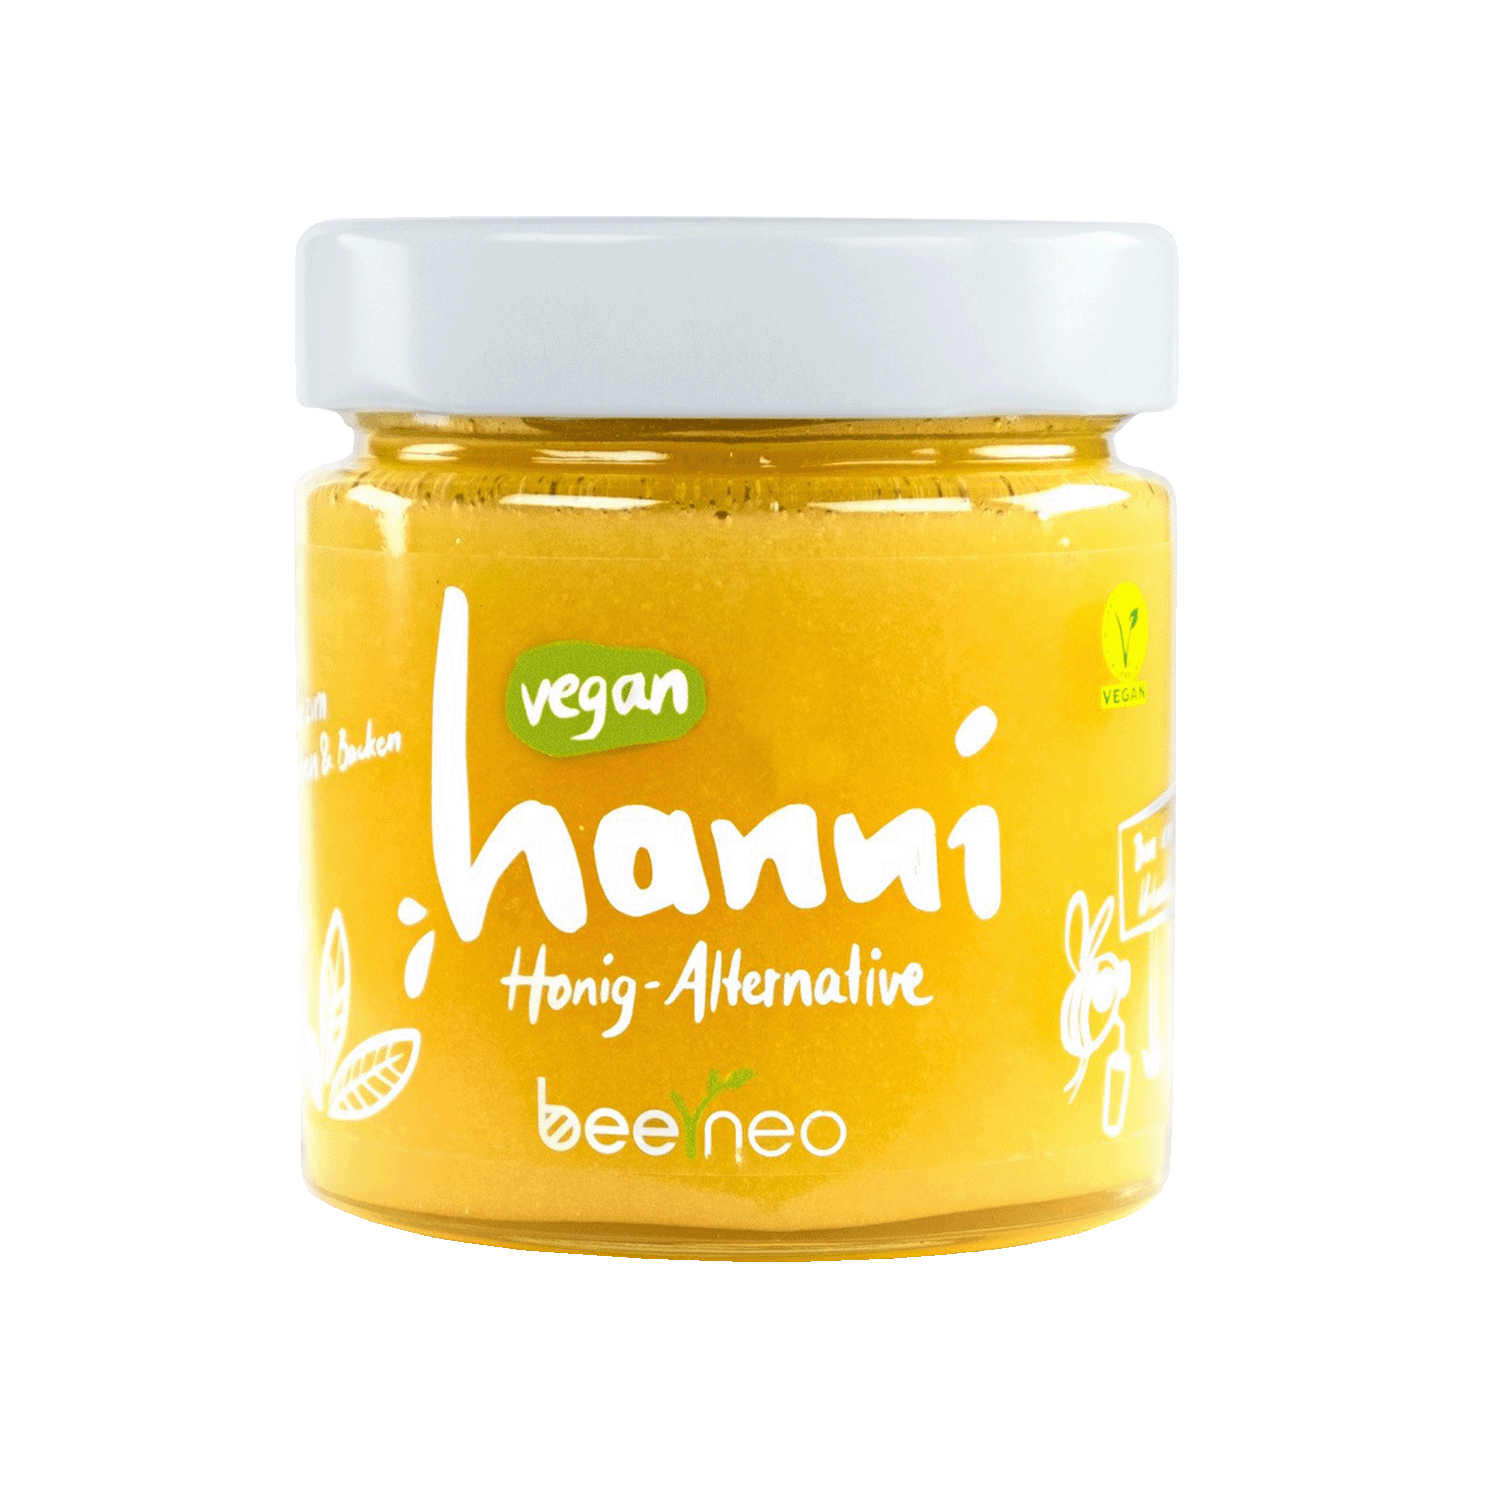 Hanni honey alternative creamy, 250g